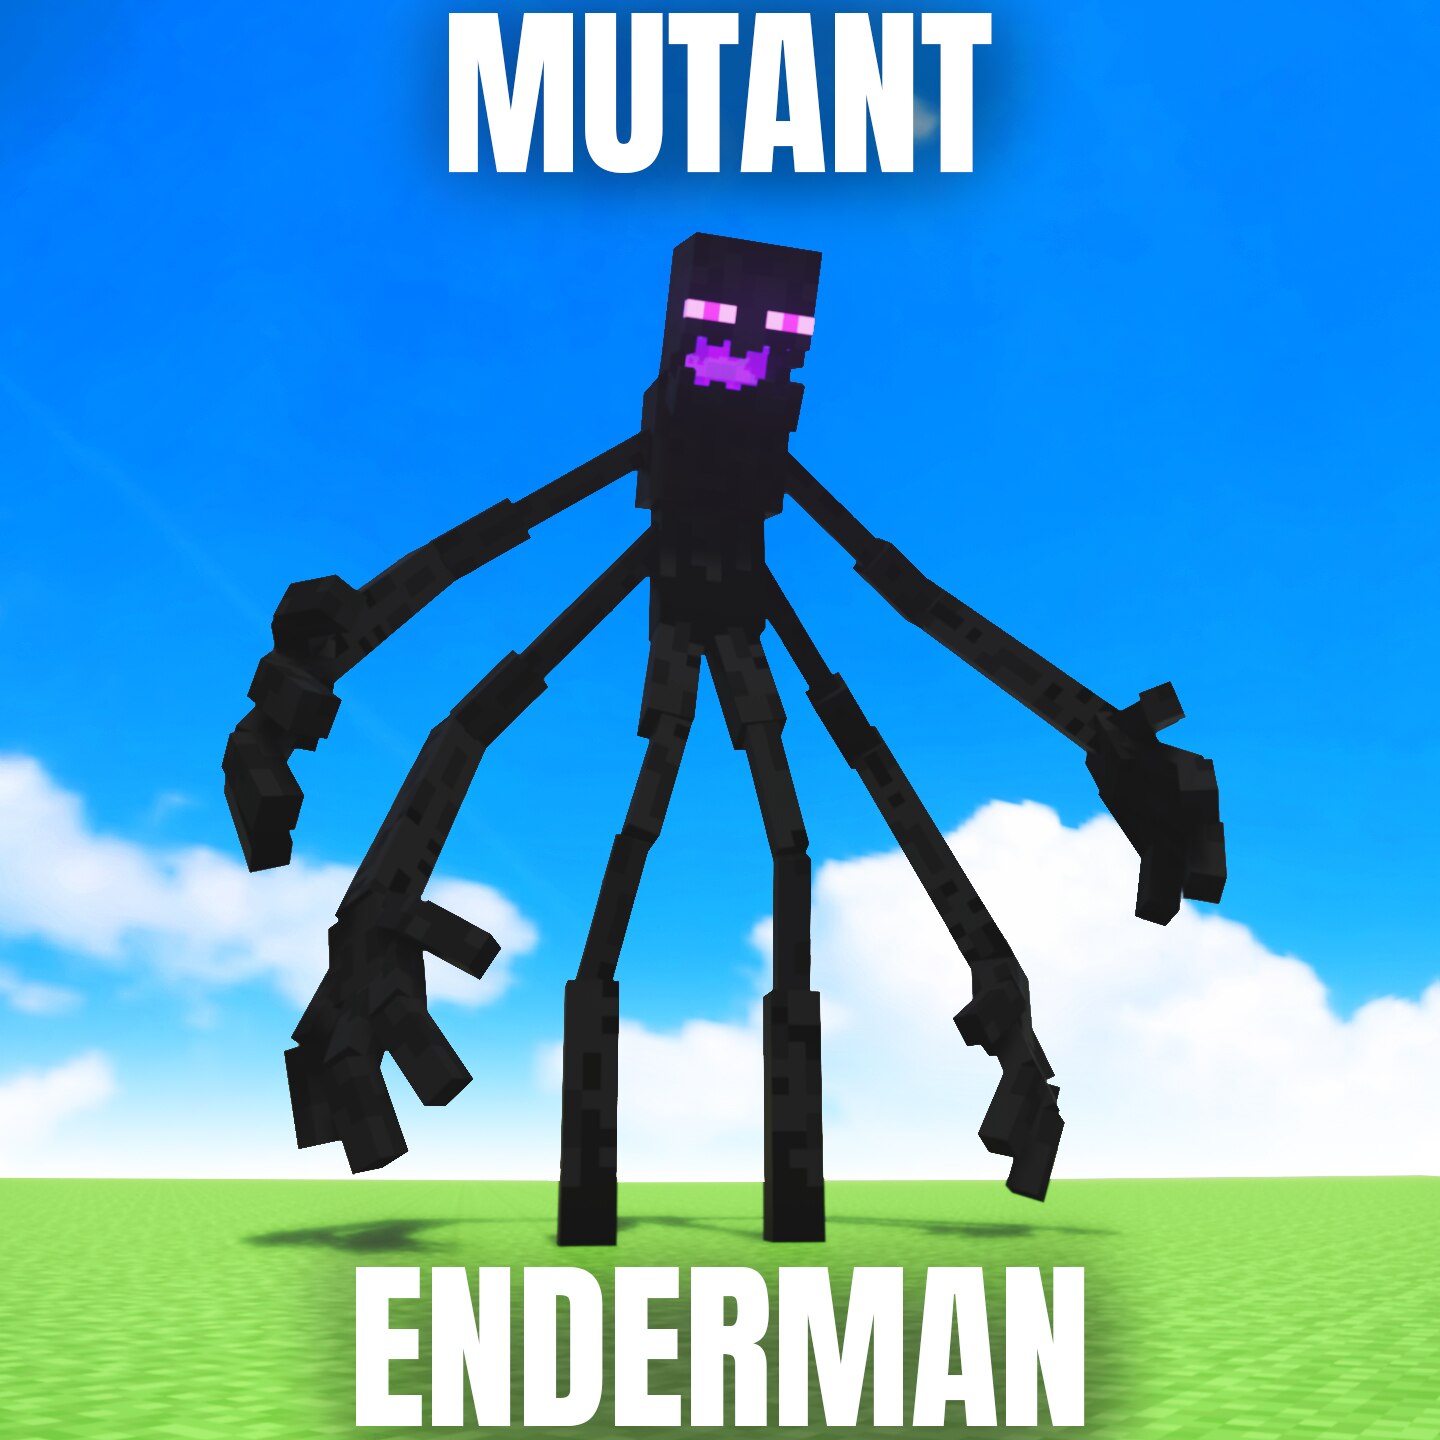 minecraft mutant enderman wallpaper